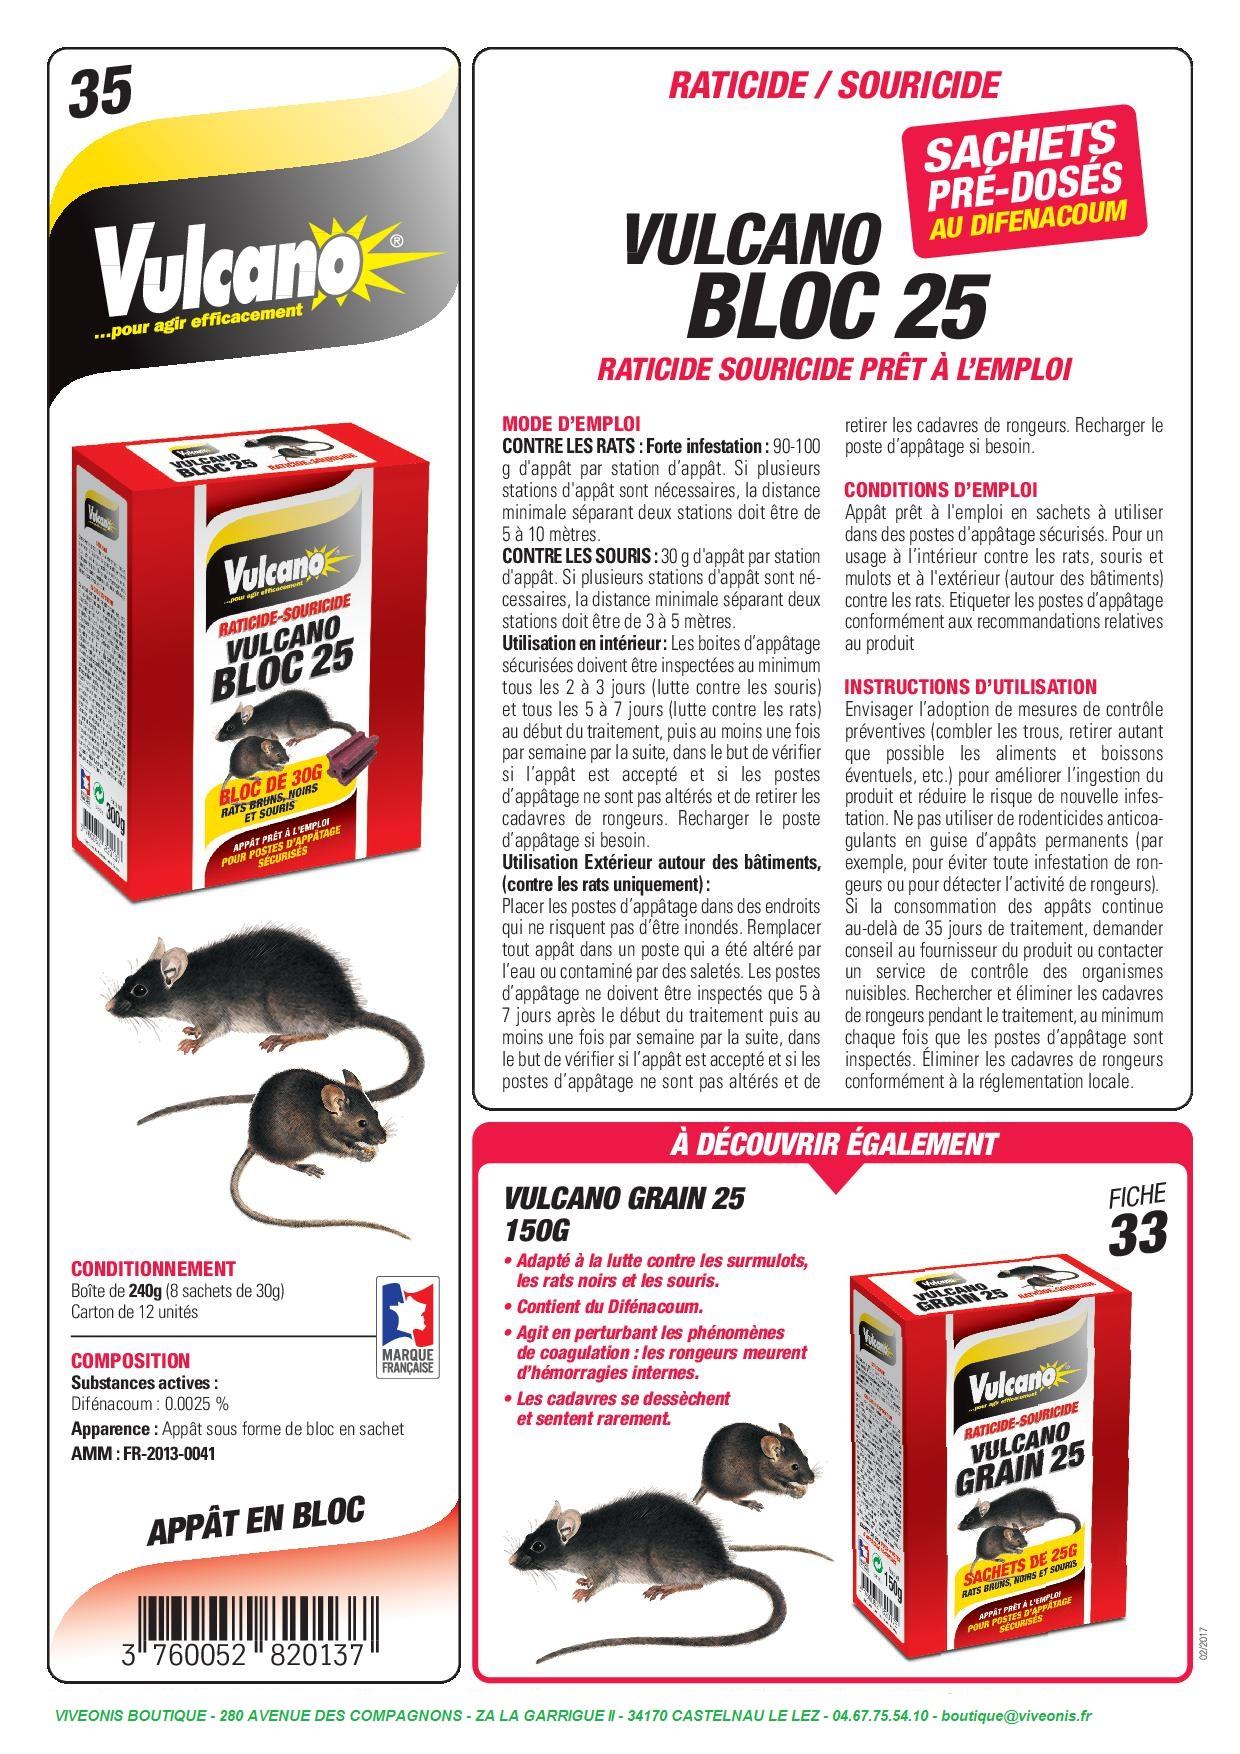 GEL ANTI-BLATTES 30 G VULCANO - Viveonis boutique